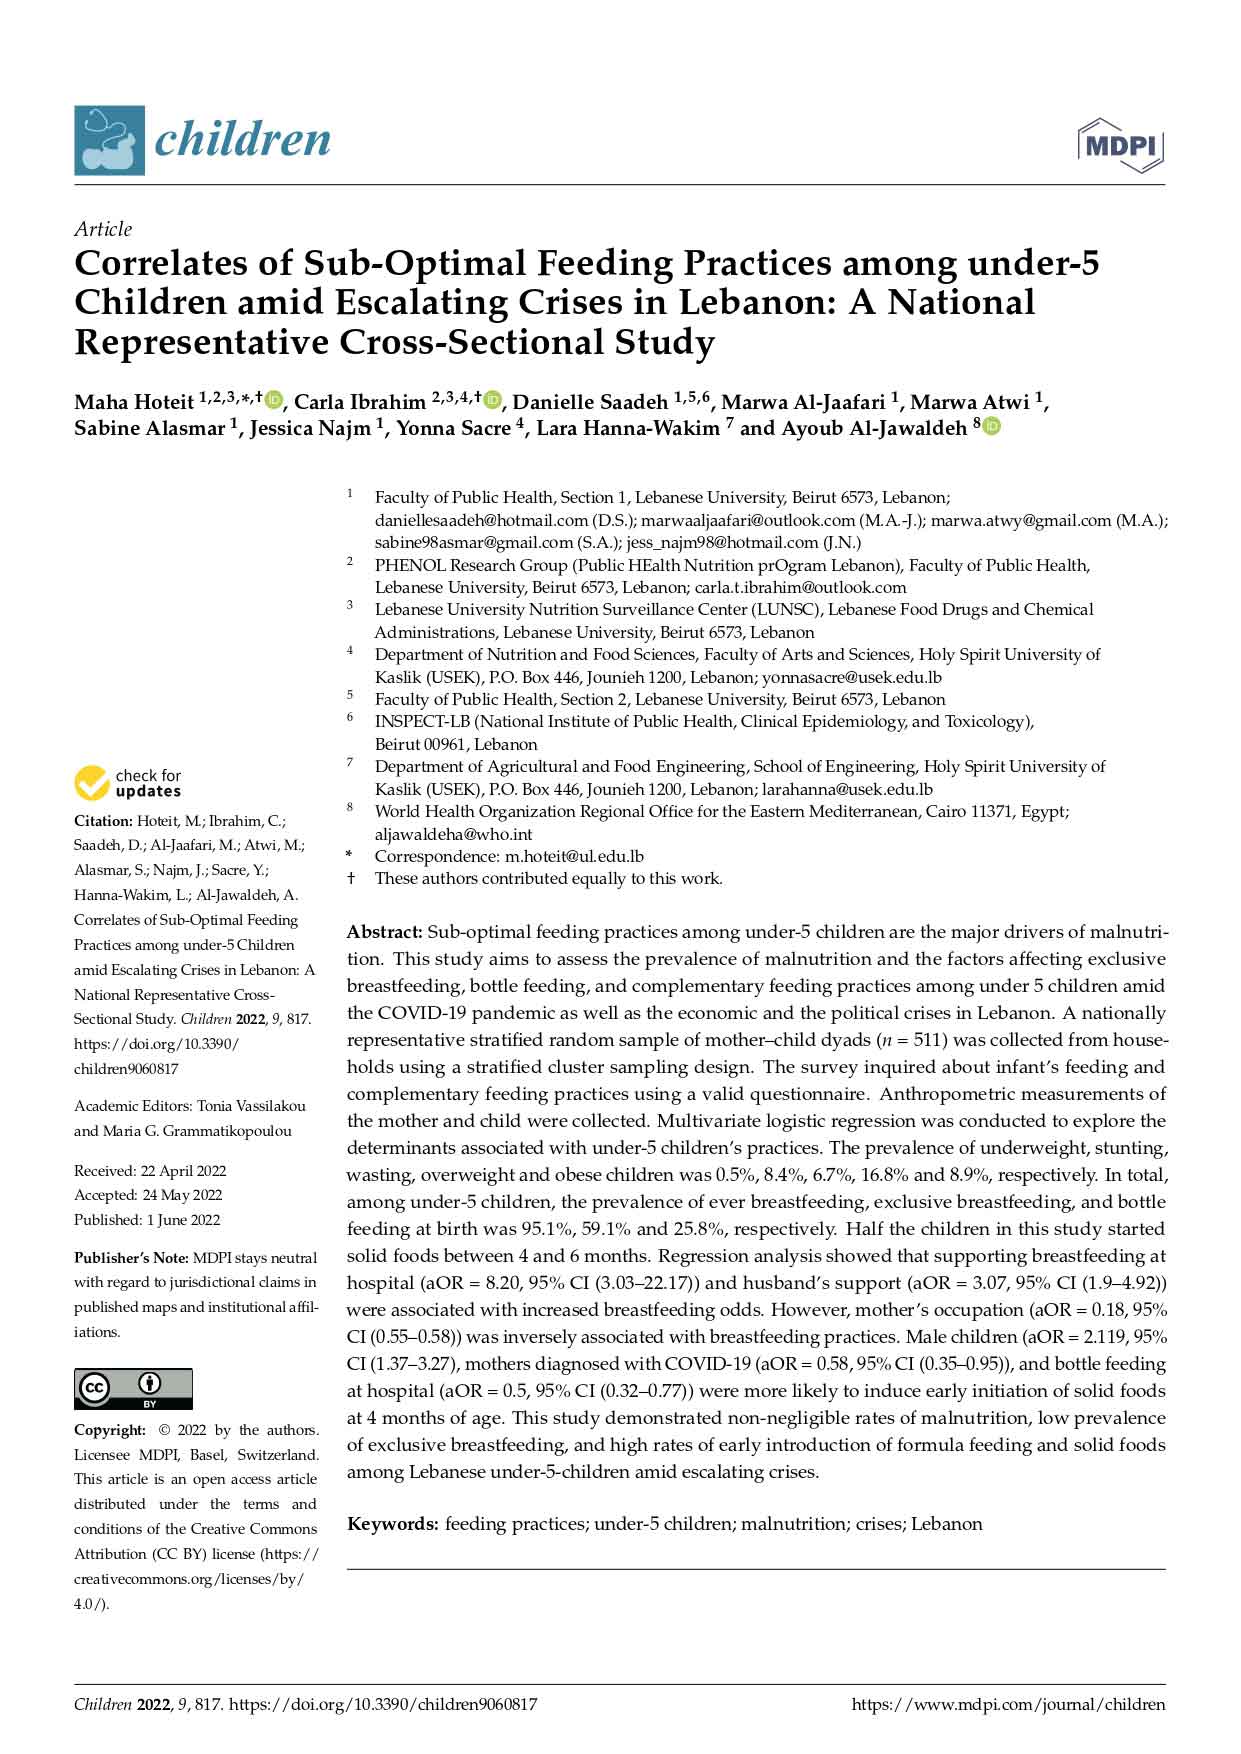 Correlates of sub-optimal feeding practices among under-5 children amid escalating crises in Lebanon: A national representative cross-sectional study